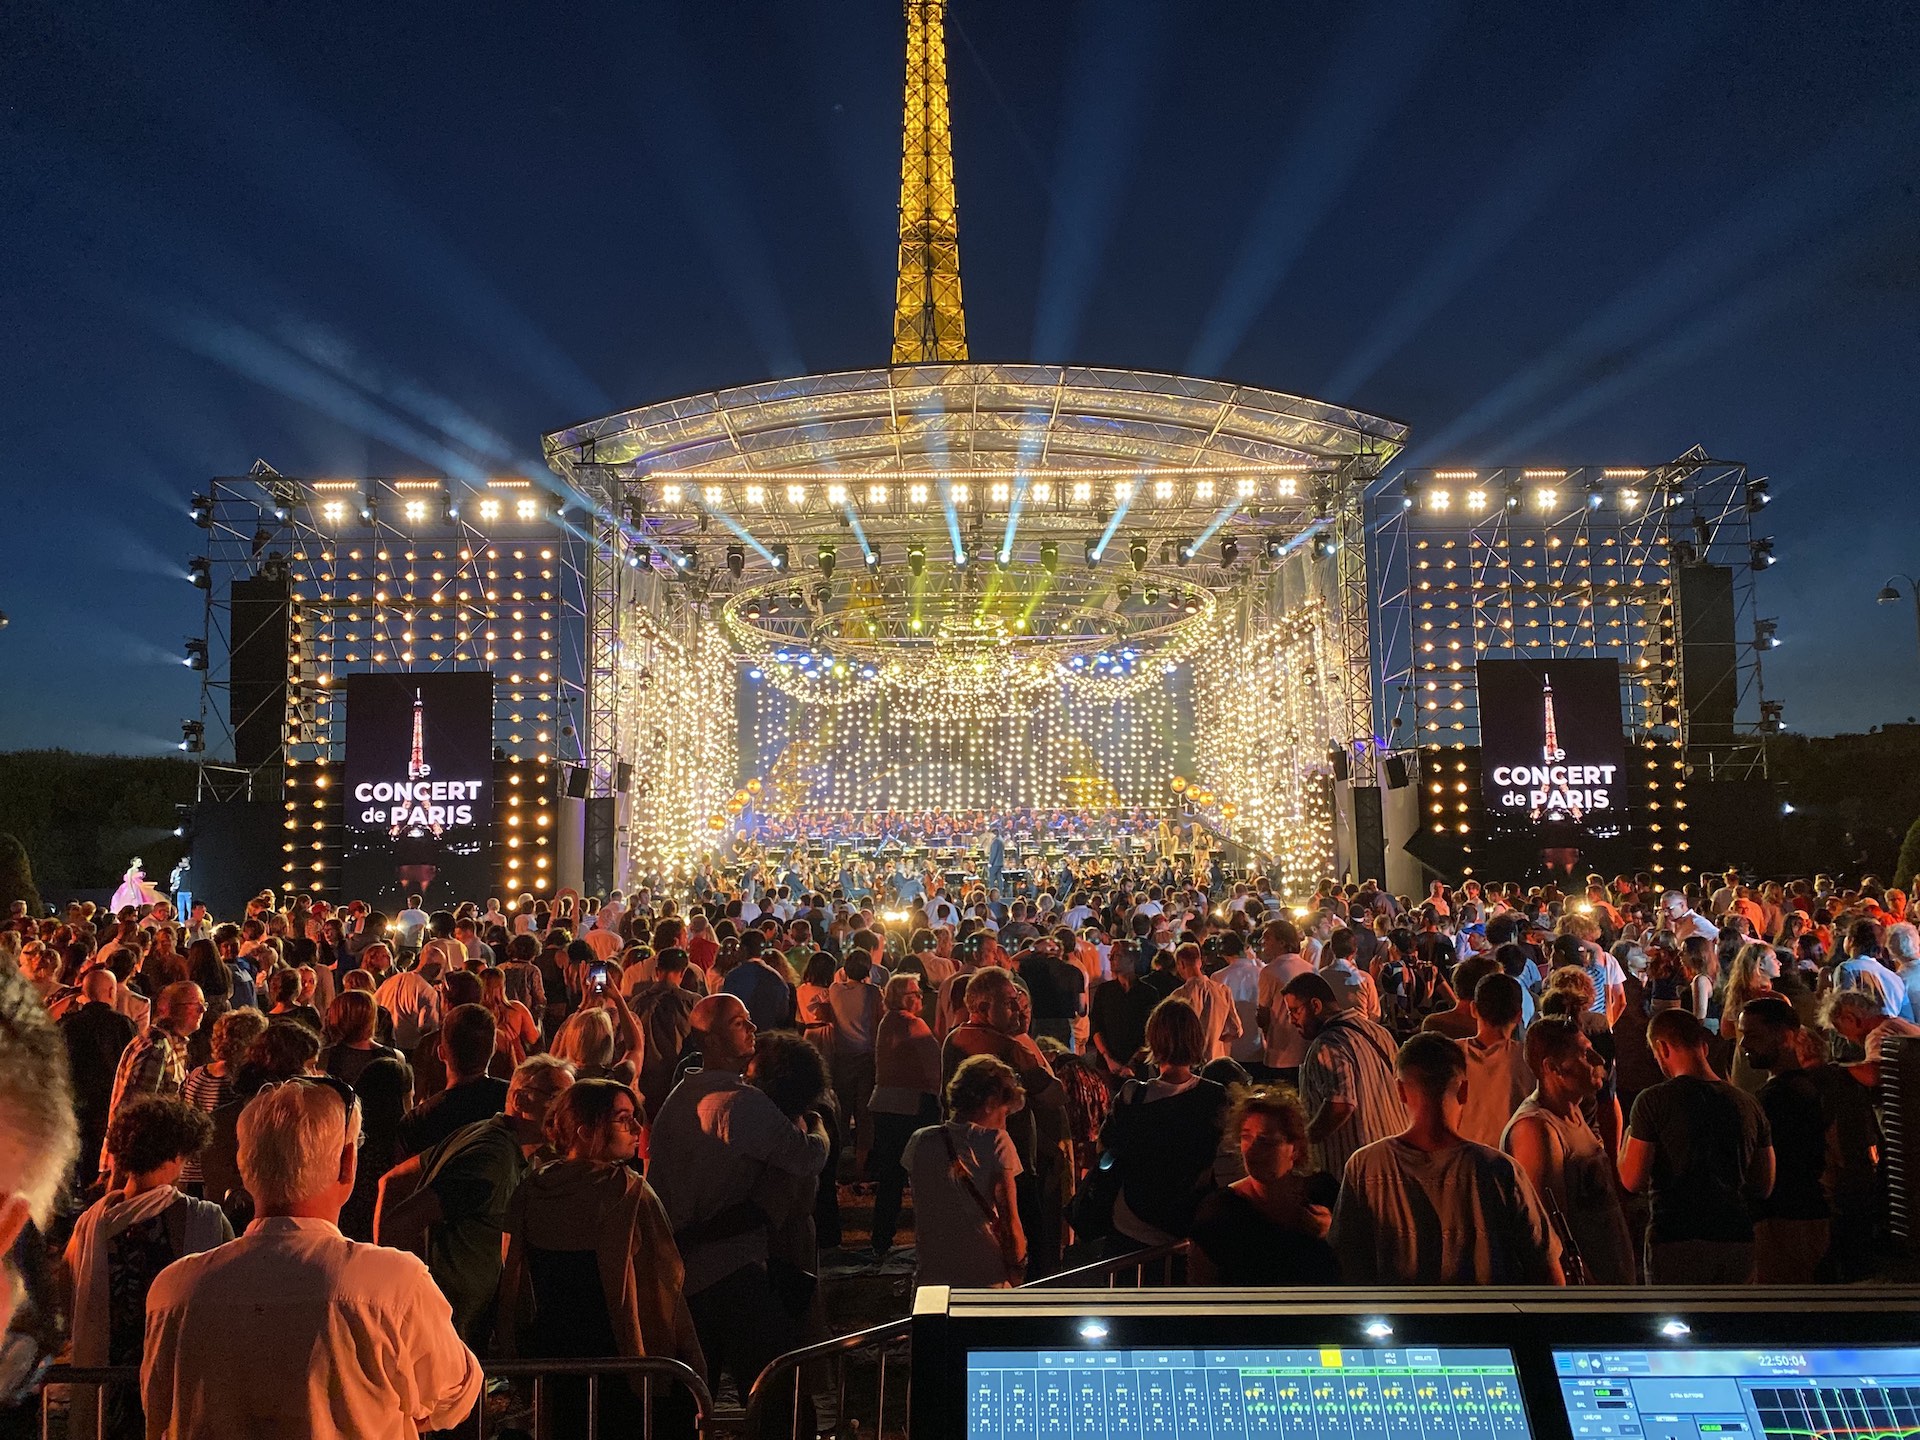 Grand Concert de Paris